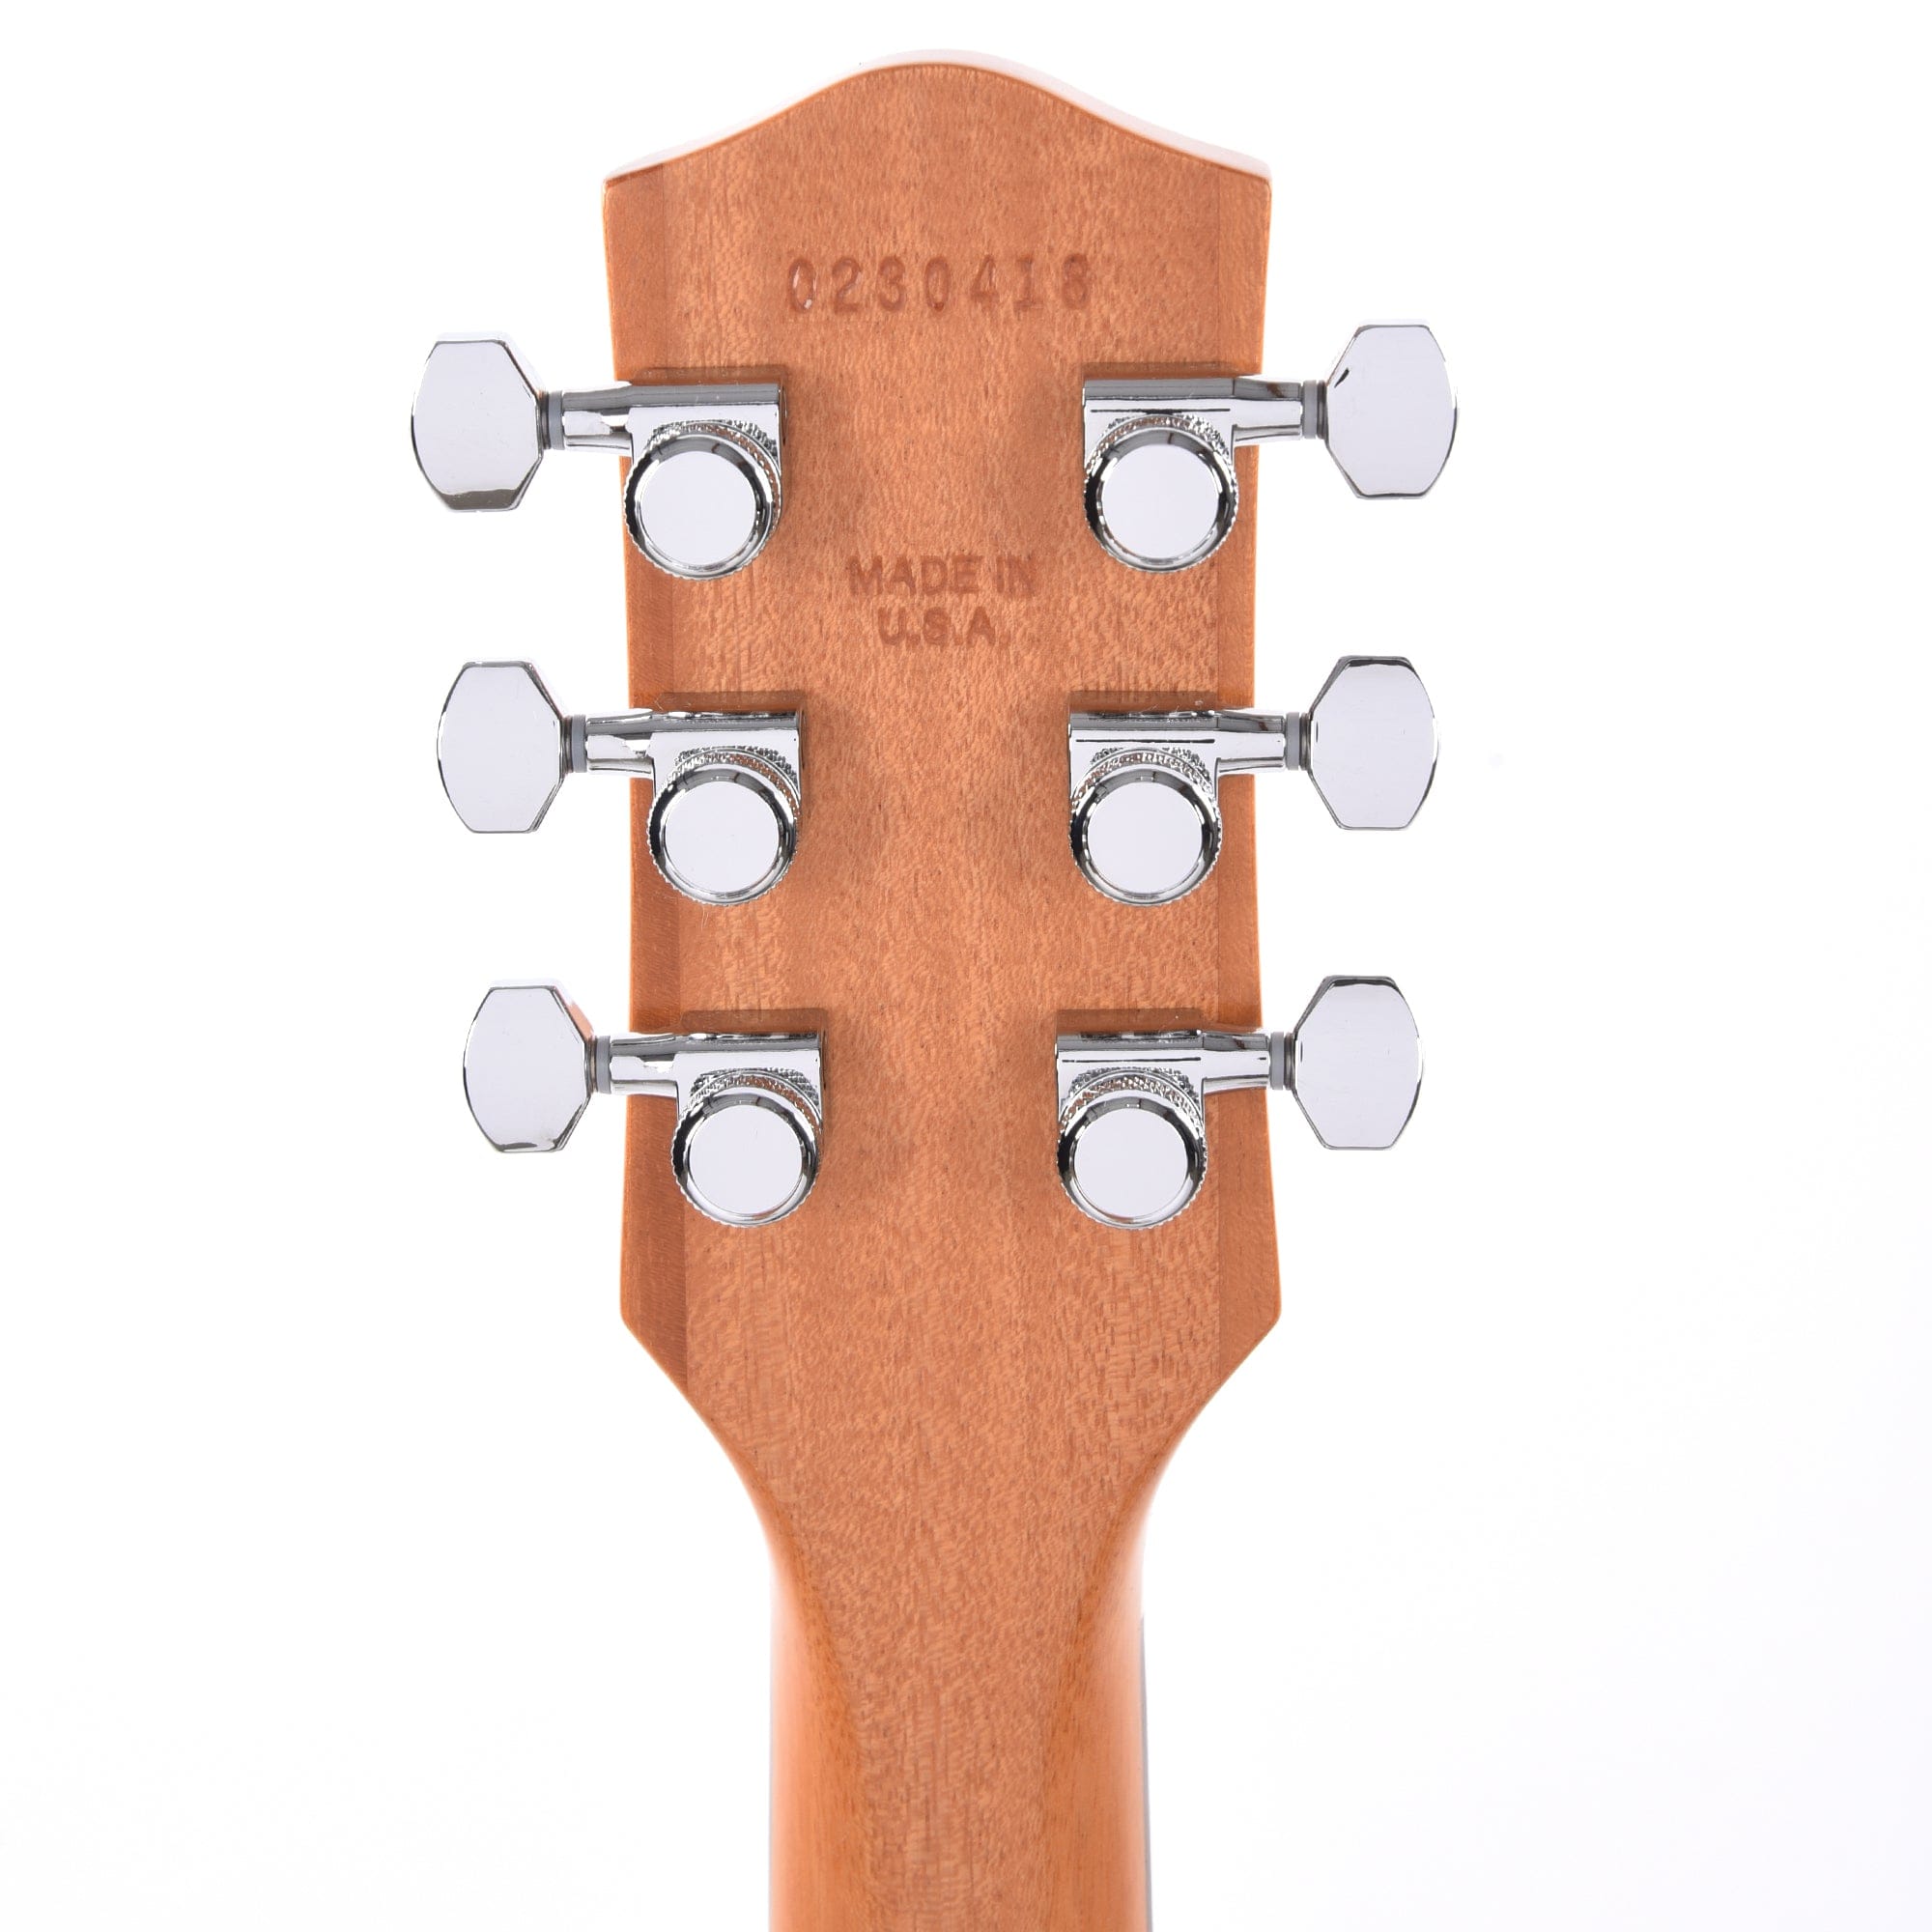 Harmony Standard Jupiter Thinline Space Black Electric Guitars / Semi-Hollow